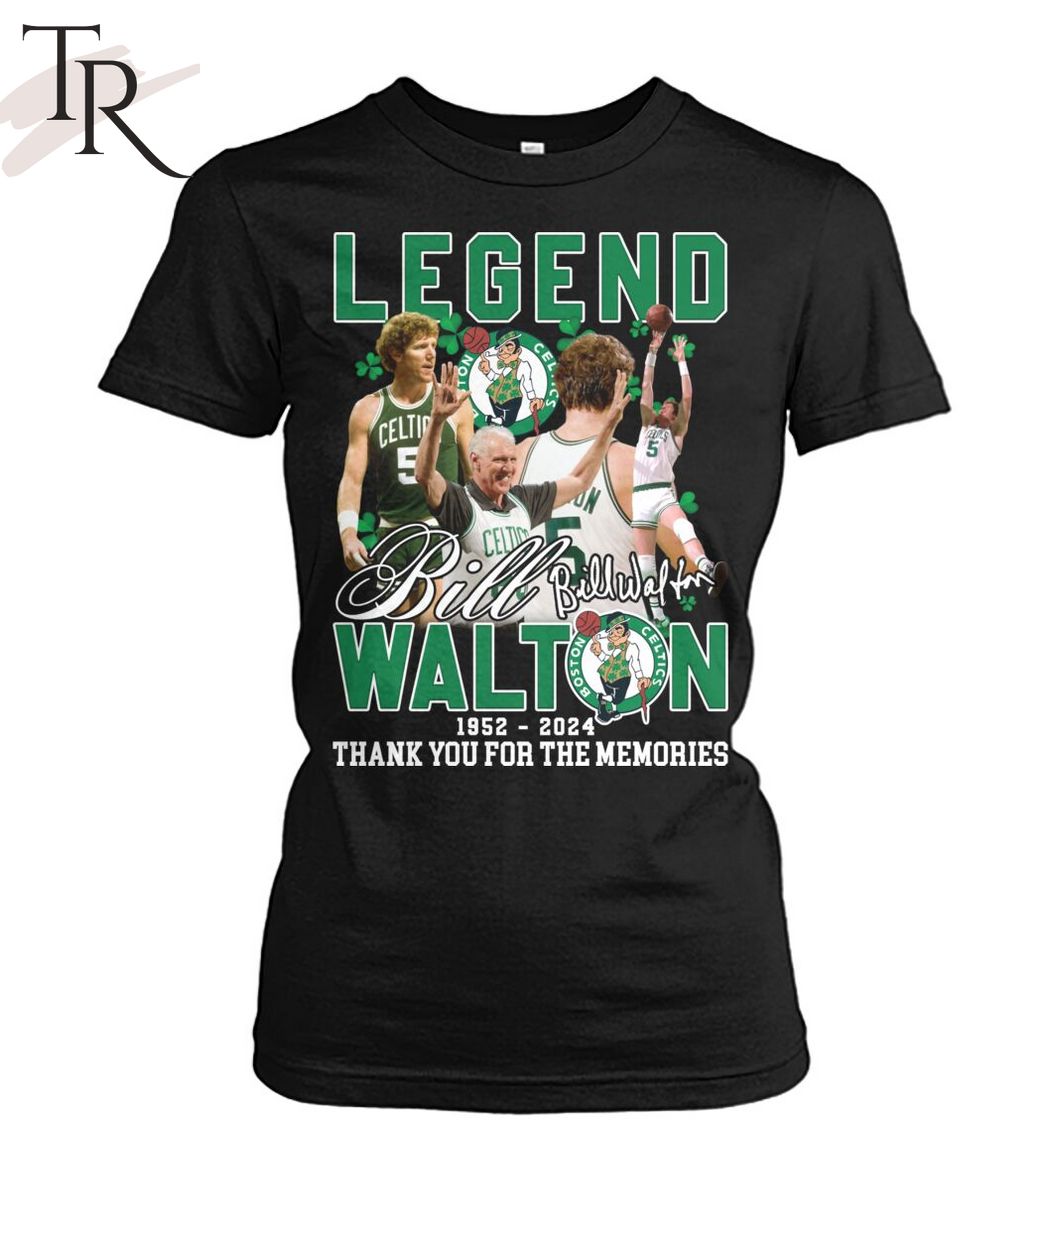 Legend Bill Walton 1952-2024 Thank You For The Memories T-Shirt